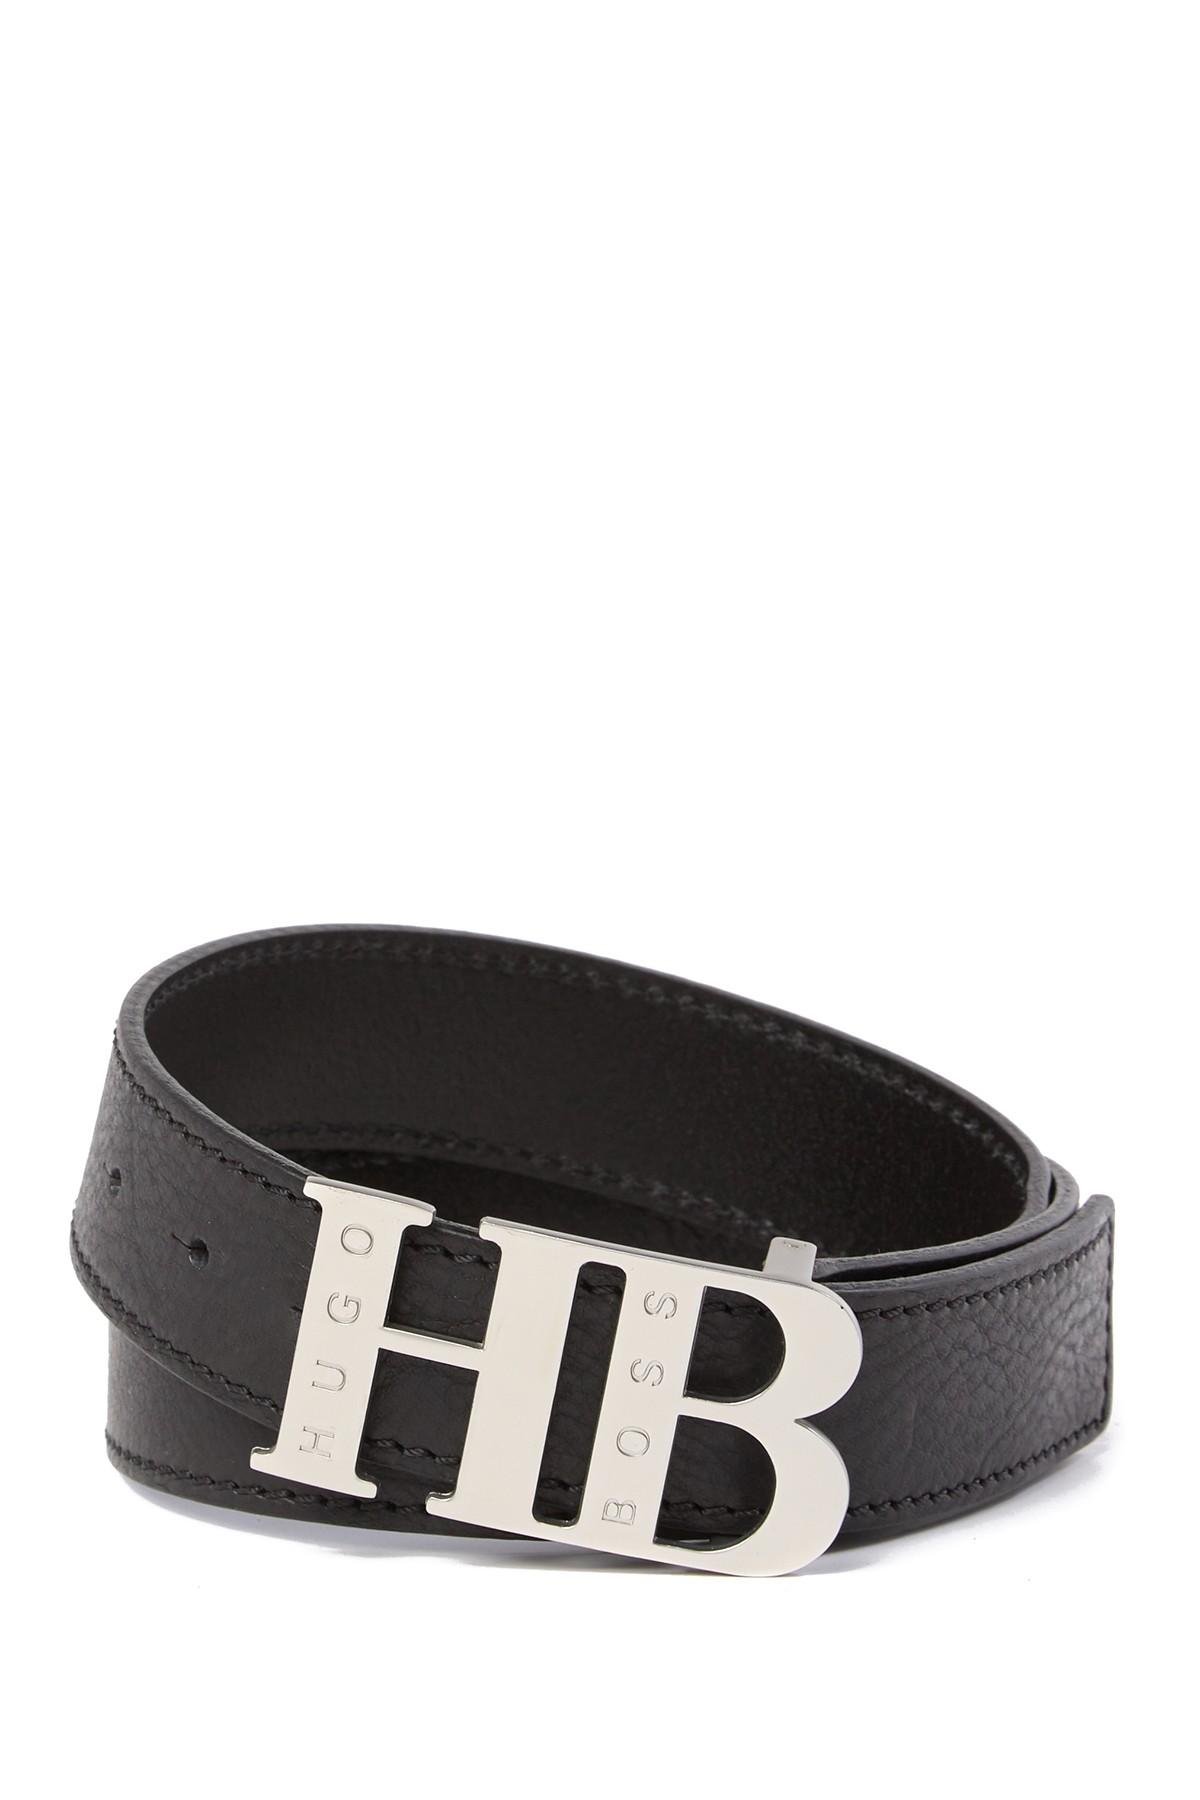 BOSS by HUGO BOSS Leather Hb Icon Buckle Belt in Black for Men - Lyst